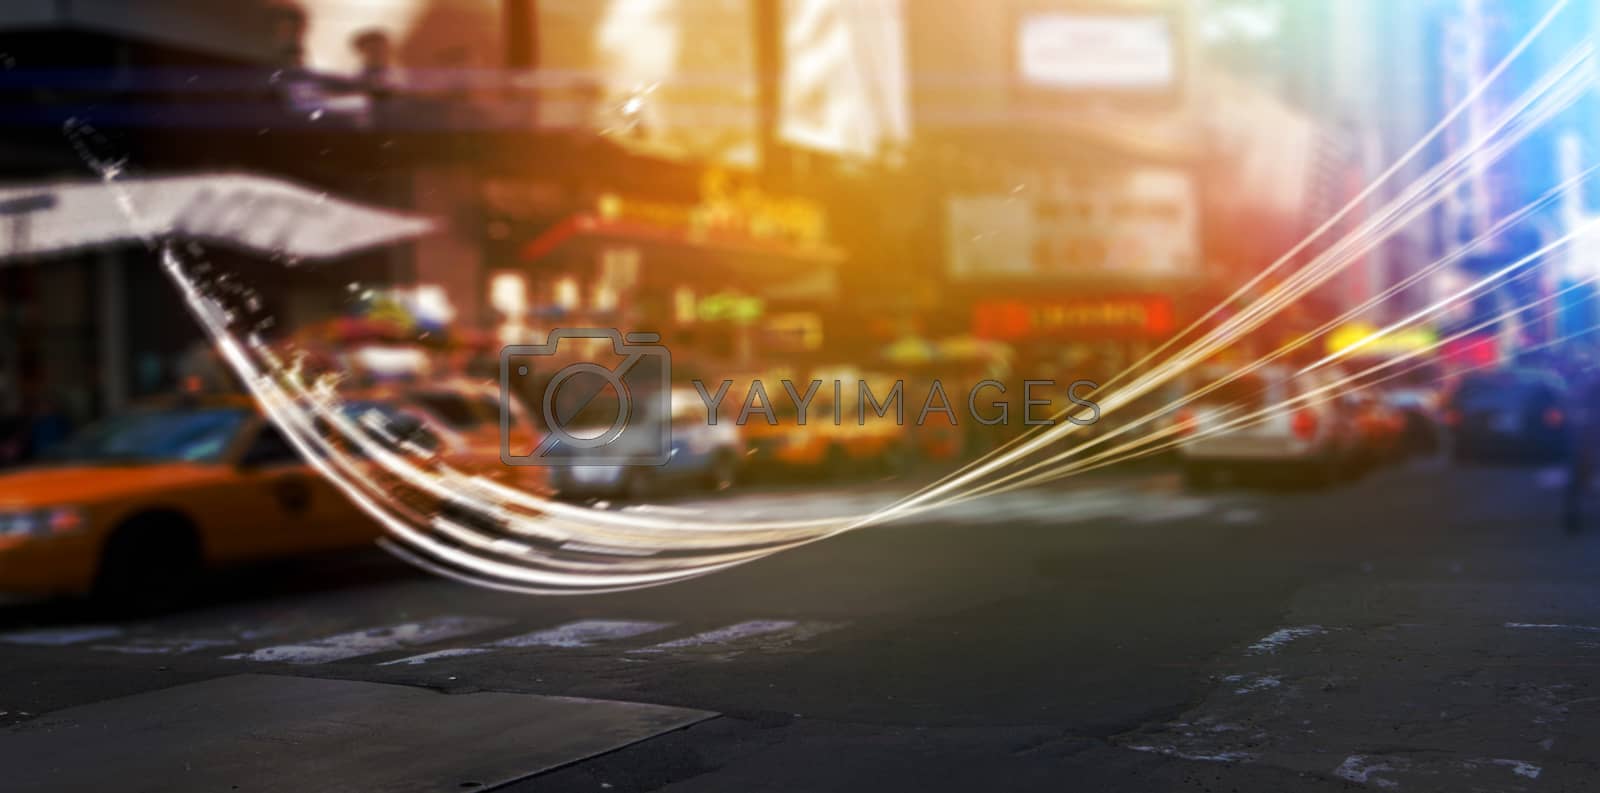 Royalty free image of Blurry new york street by Wavebreakmedia